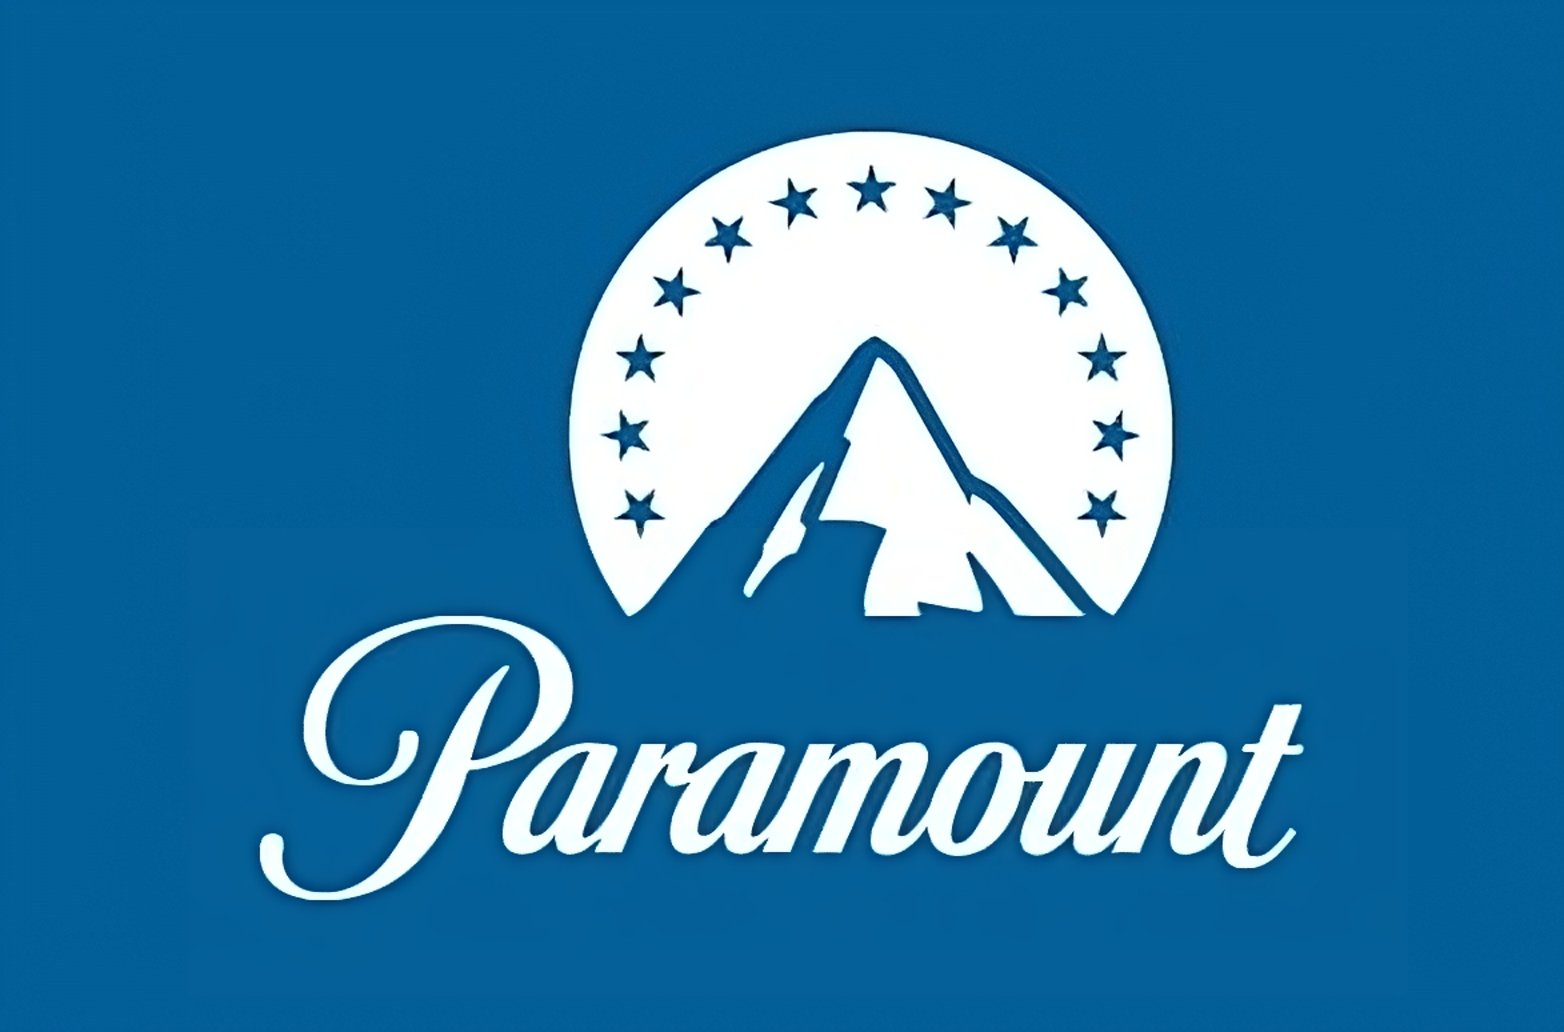 Paramount - Arditex S.A.